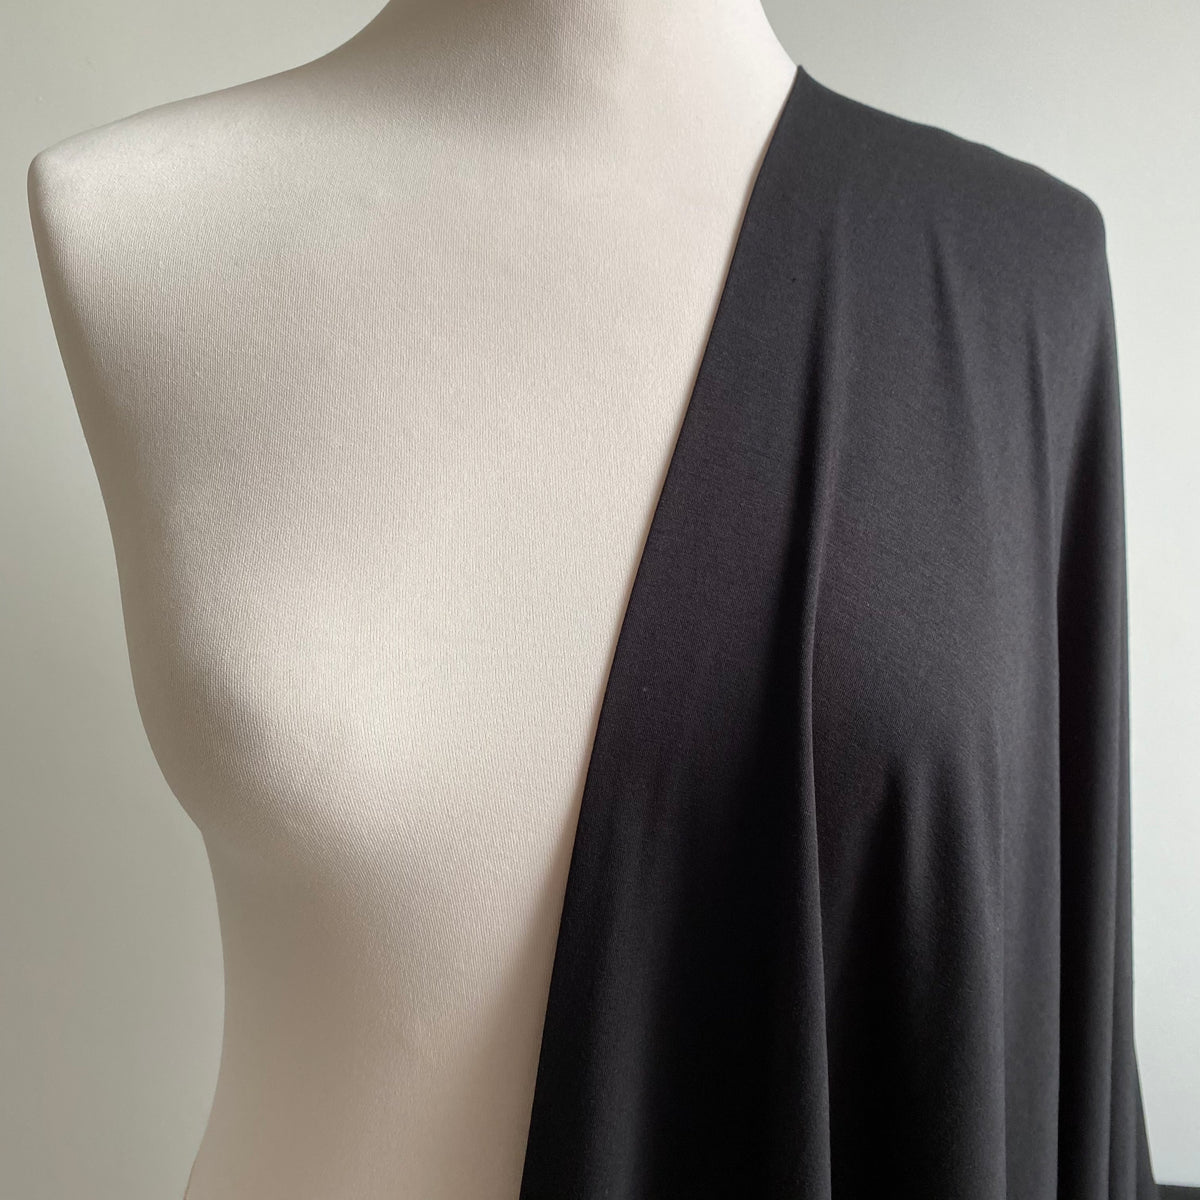 Bamboo Jersey Fabric - Black - Priced per 0.5 metre